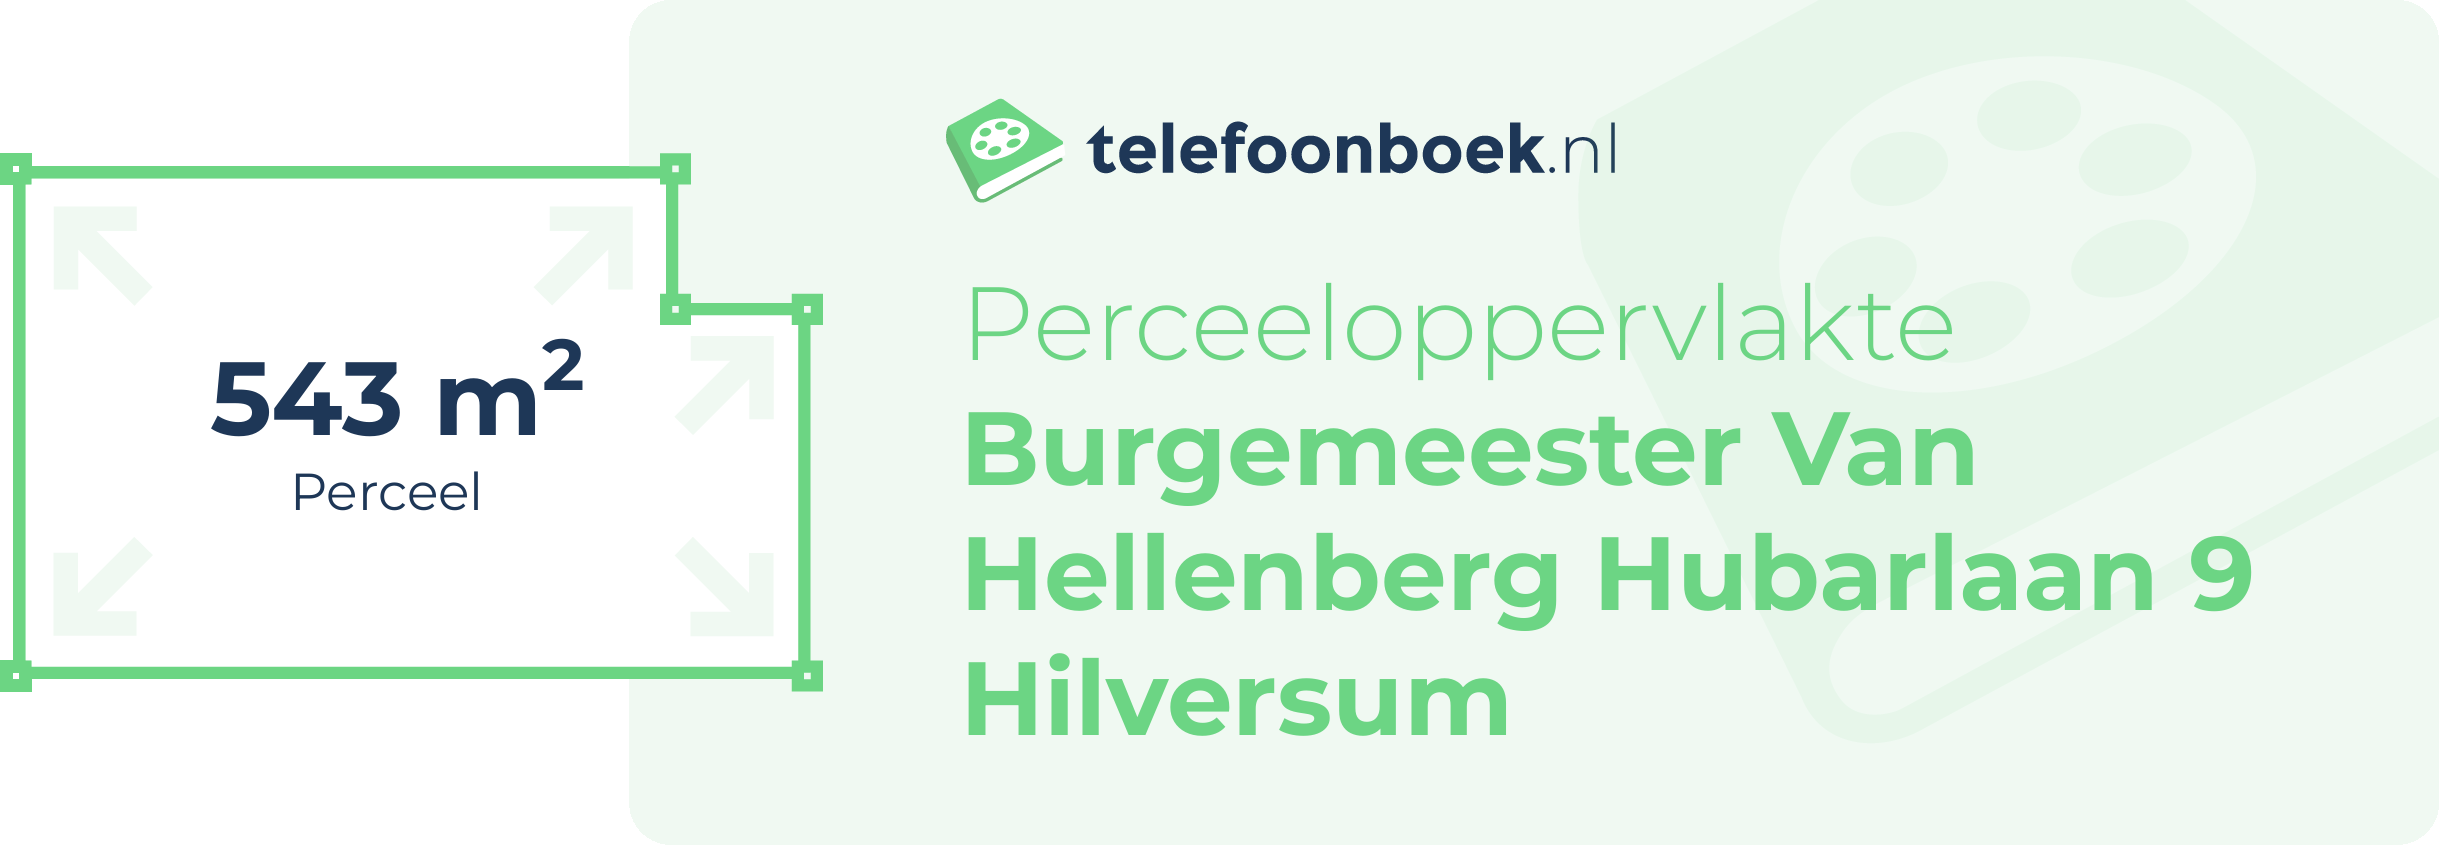 Perceeloppervlakte Burgemeester Van Hellenberg Hubarlaan 9 Hilversum